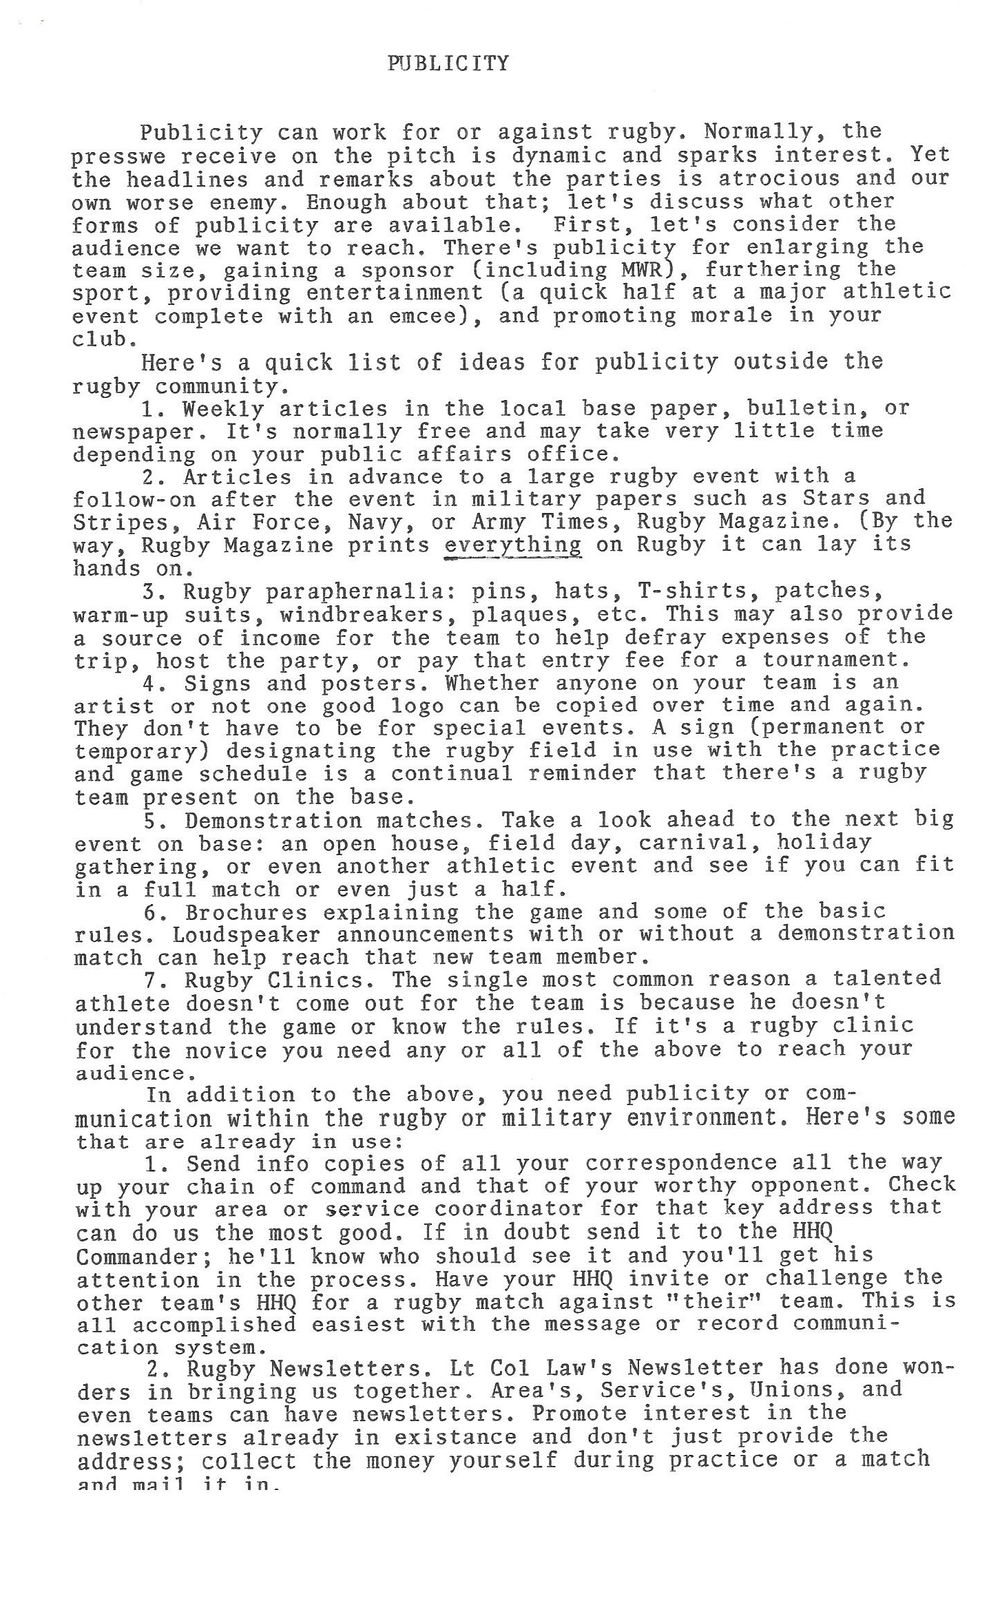 1984 CS Comm Publicity report 1.jpg